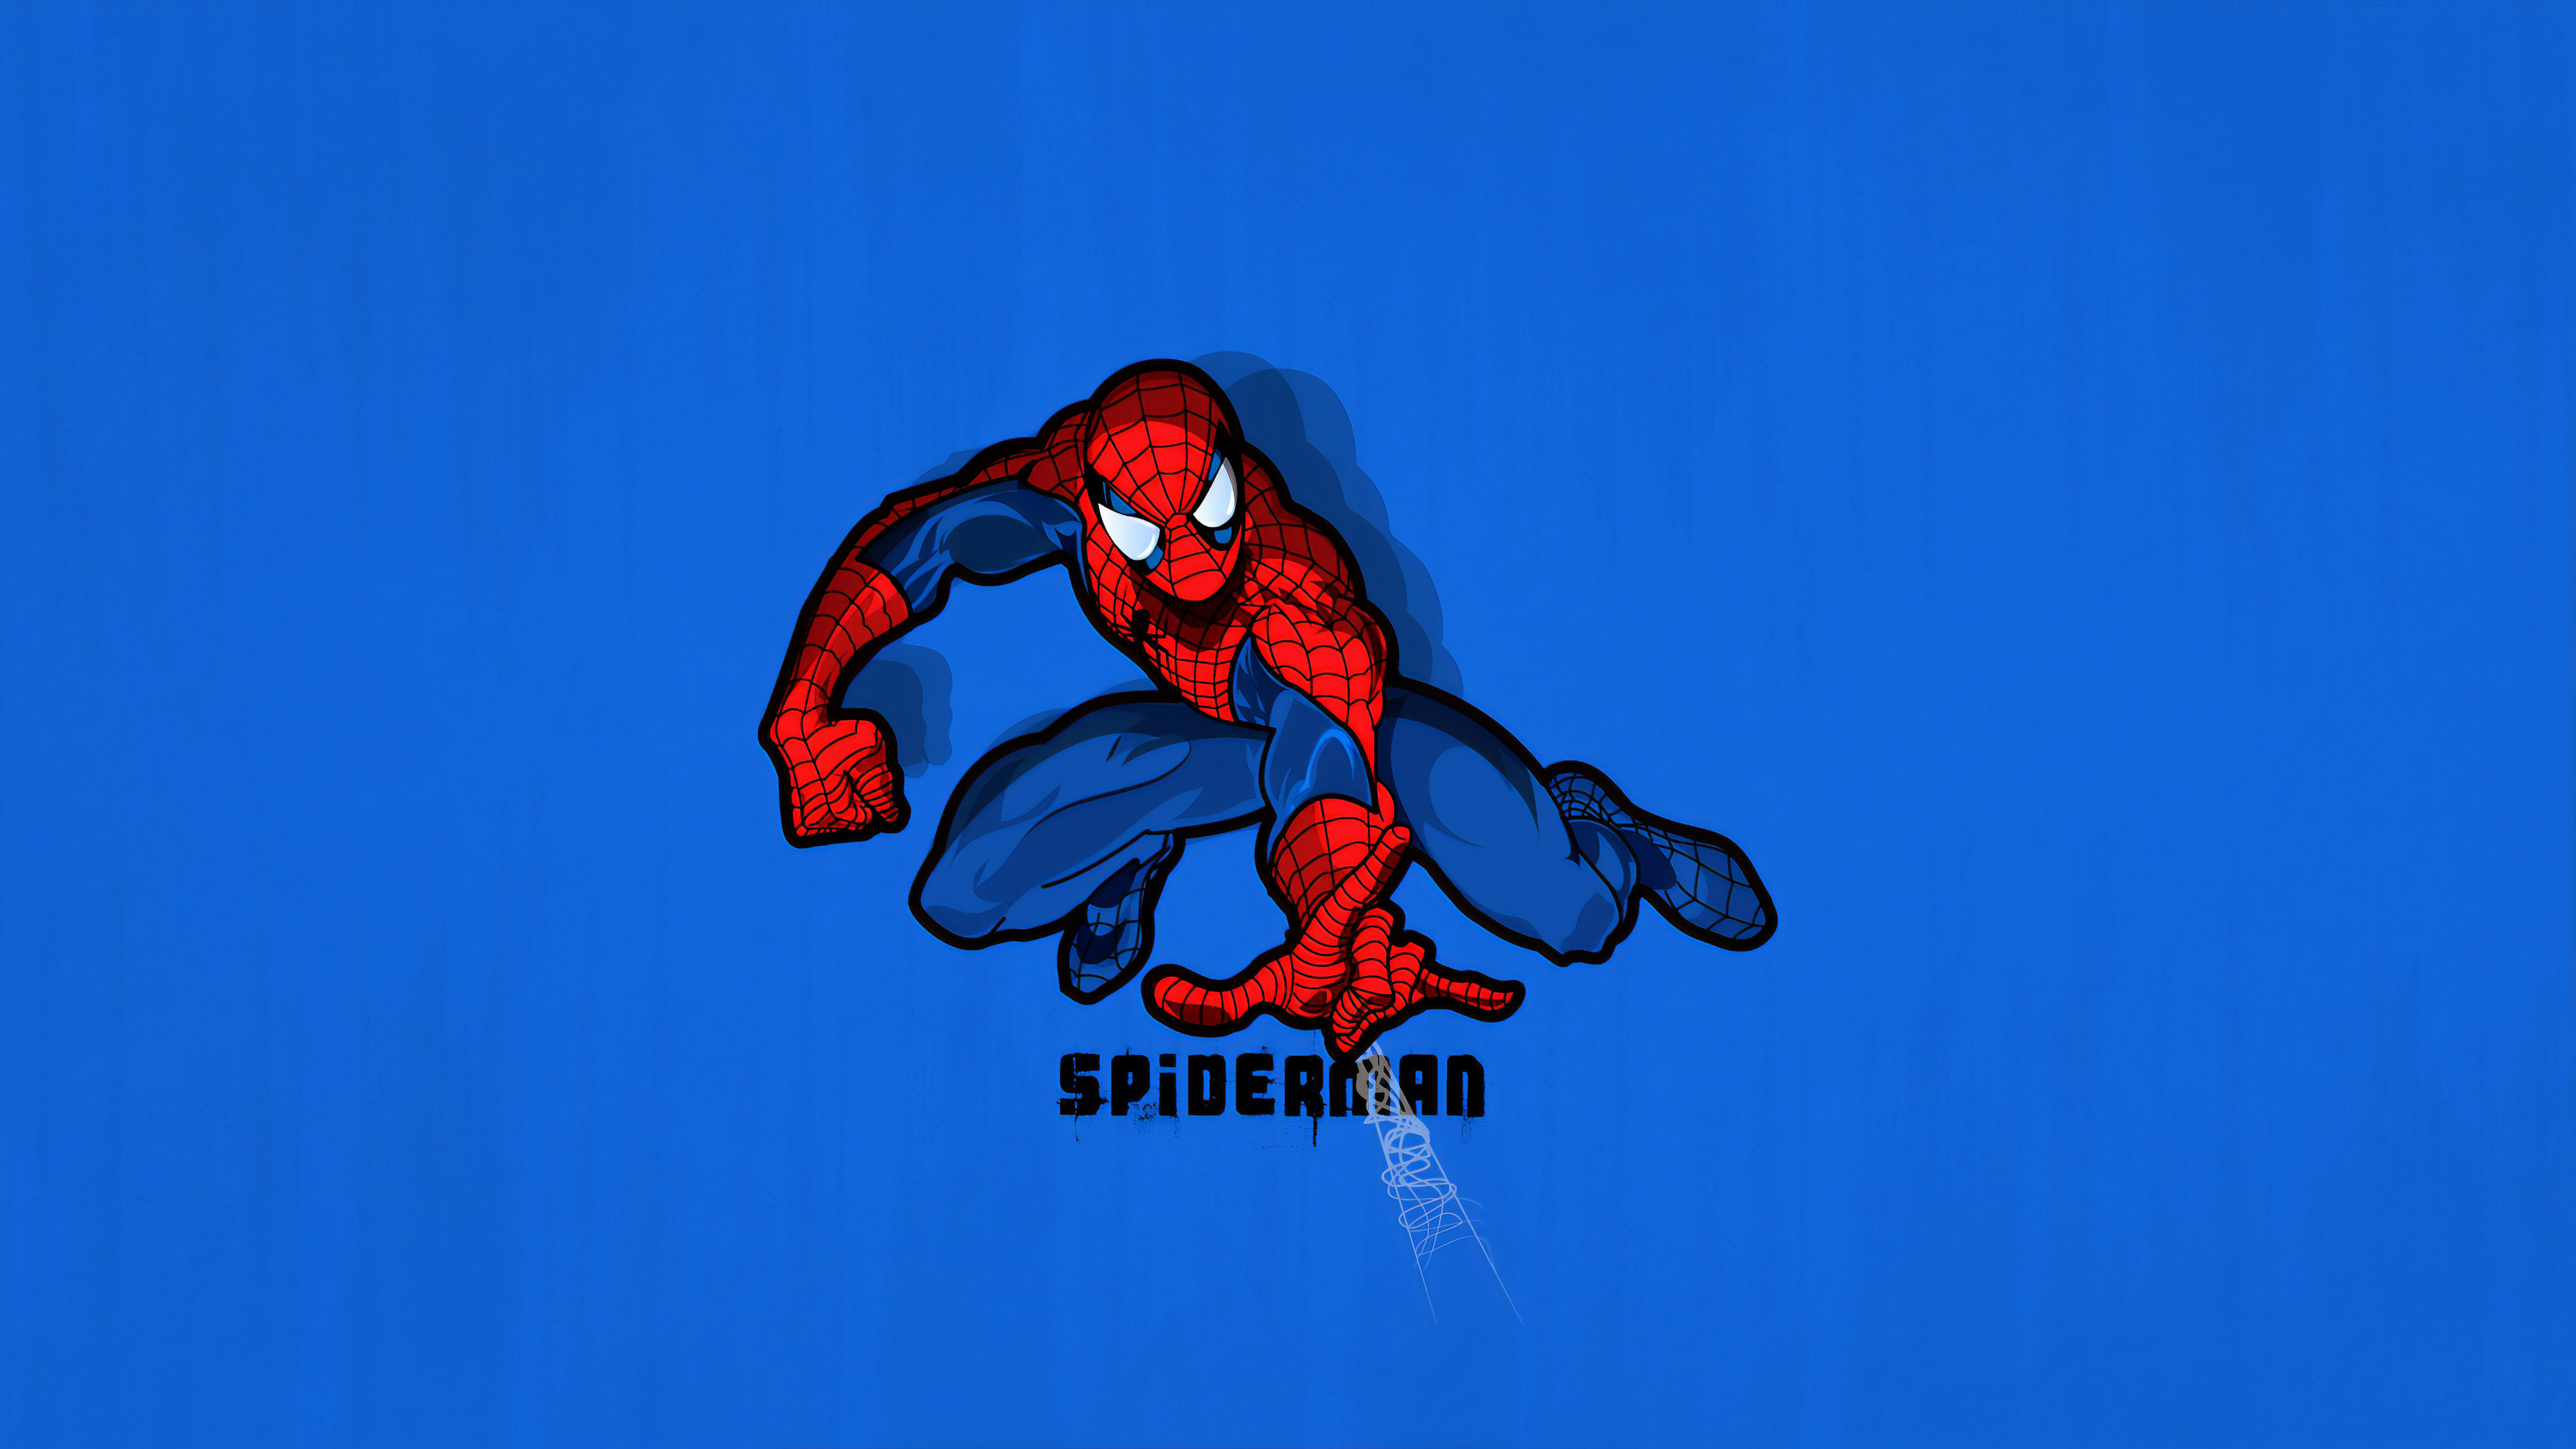 Minimal Spiderman Wallpaper, HD Superheroes 4K Wallpapers, Images ...